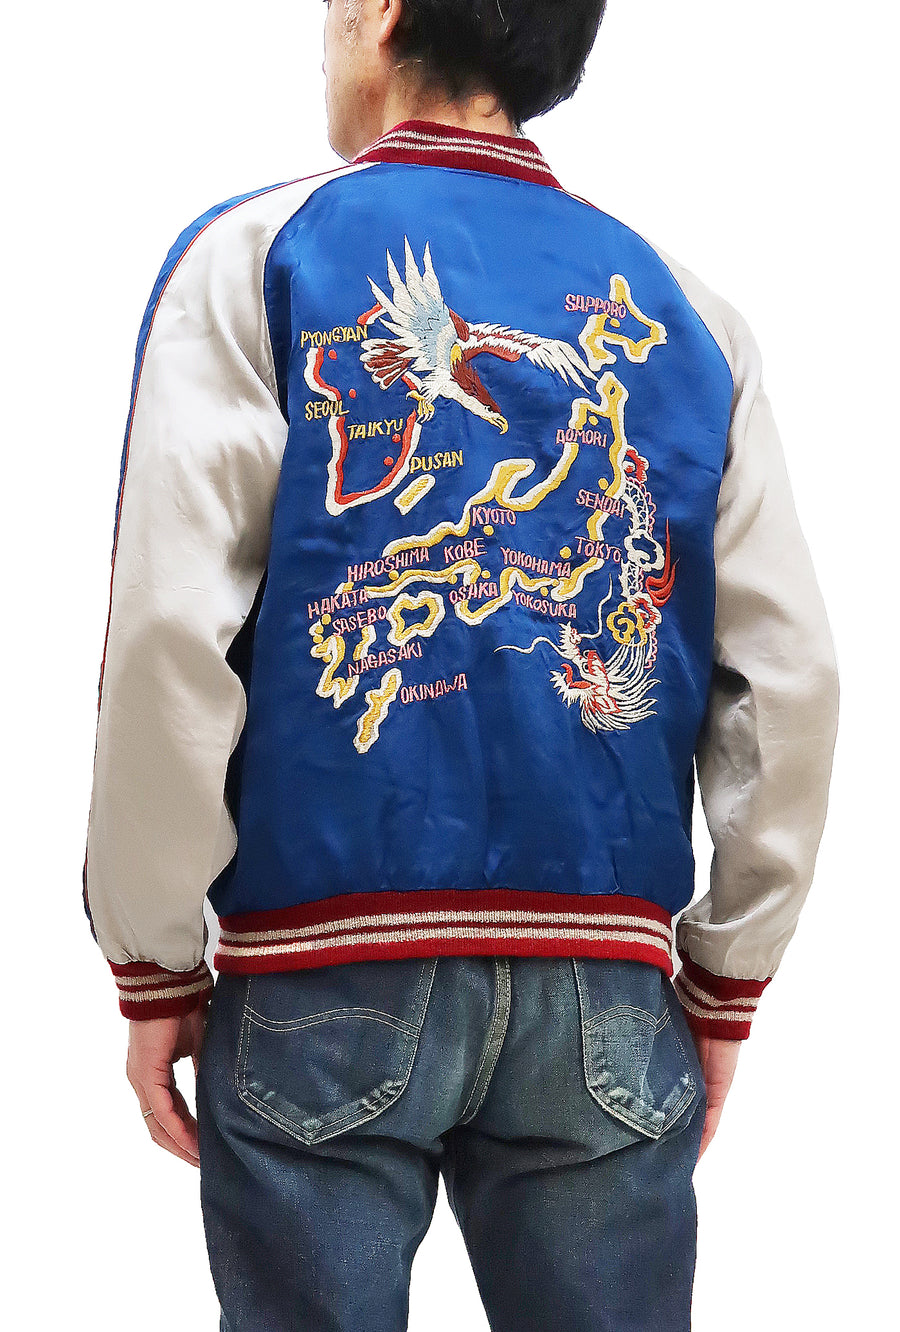 KOSHO & CO. Jacket Tailor Toyo Sukajan Men's Japanese Souvenir